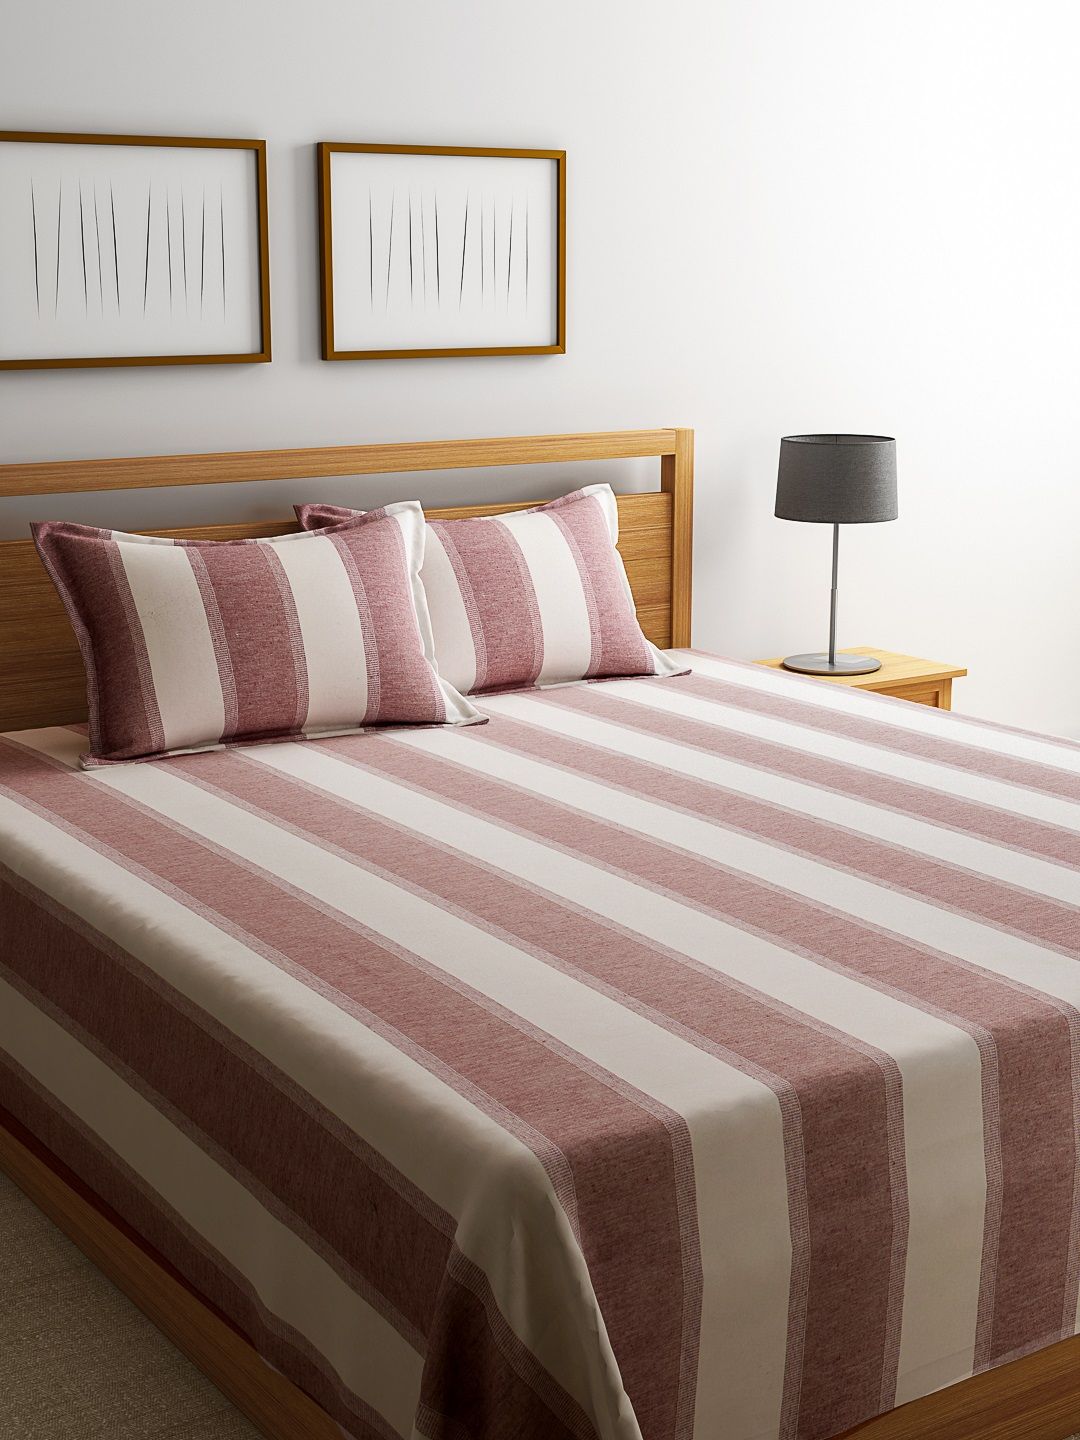 ROMEE Cream & Mauve Cotton Striped Double Bed Cover Price in India